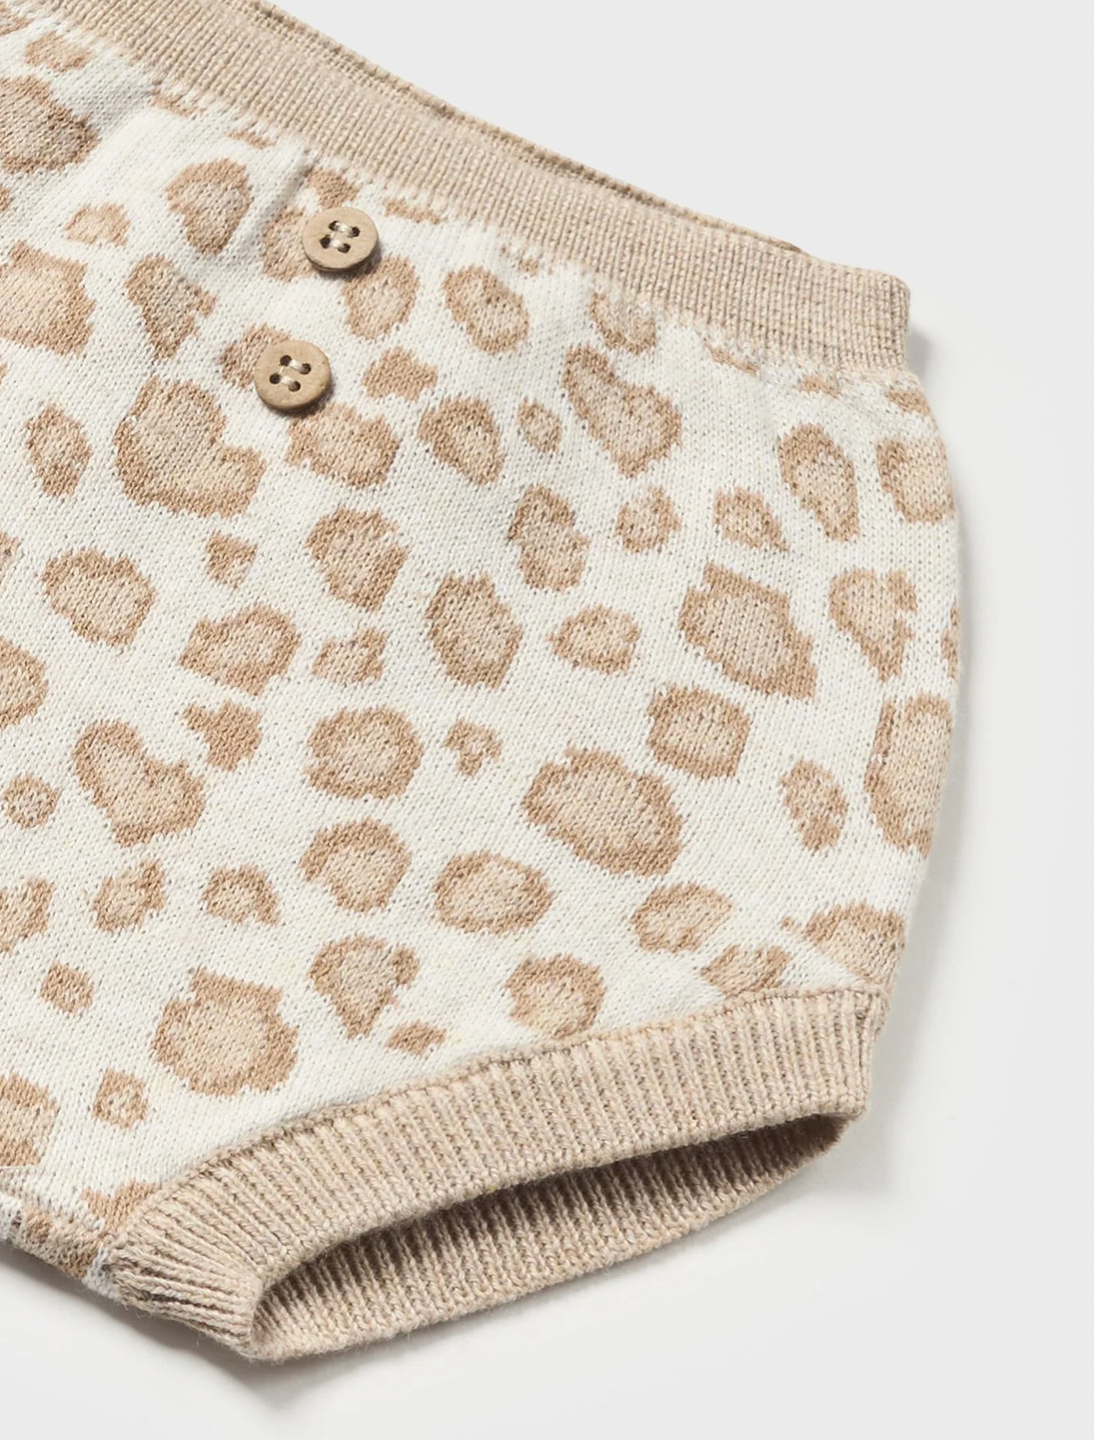 3-piece knit set Better Cotton newborn baby